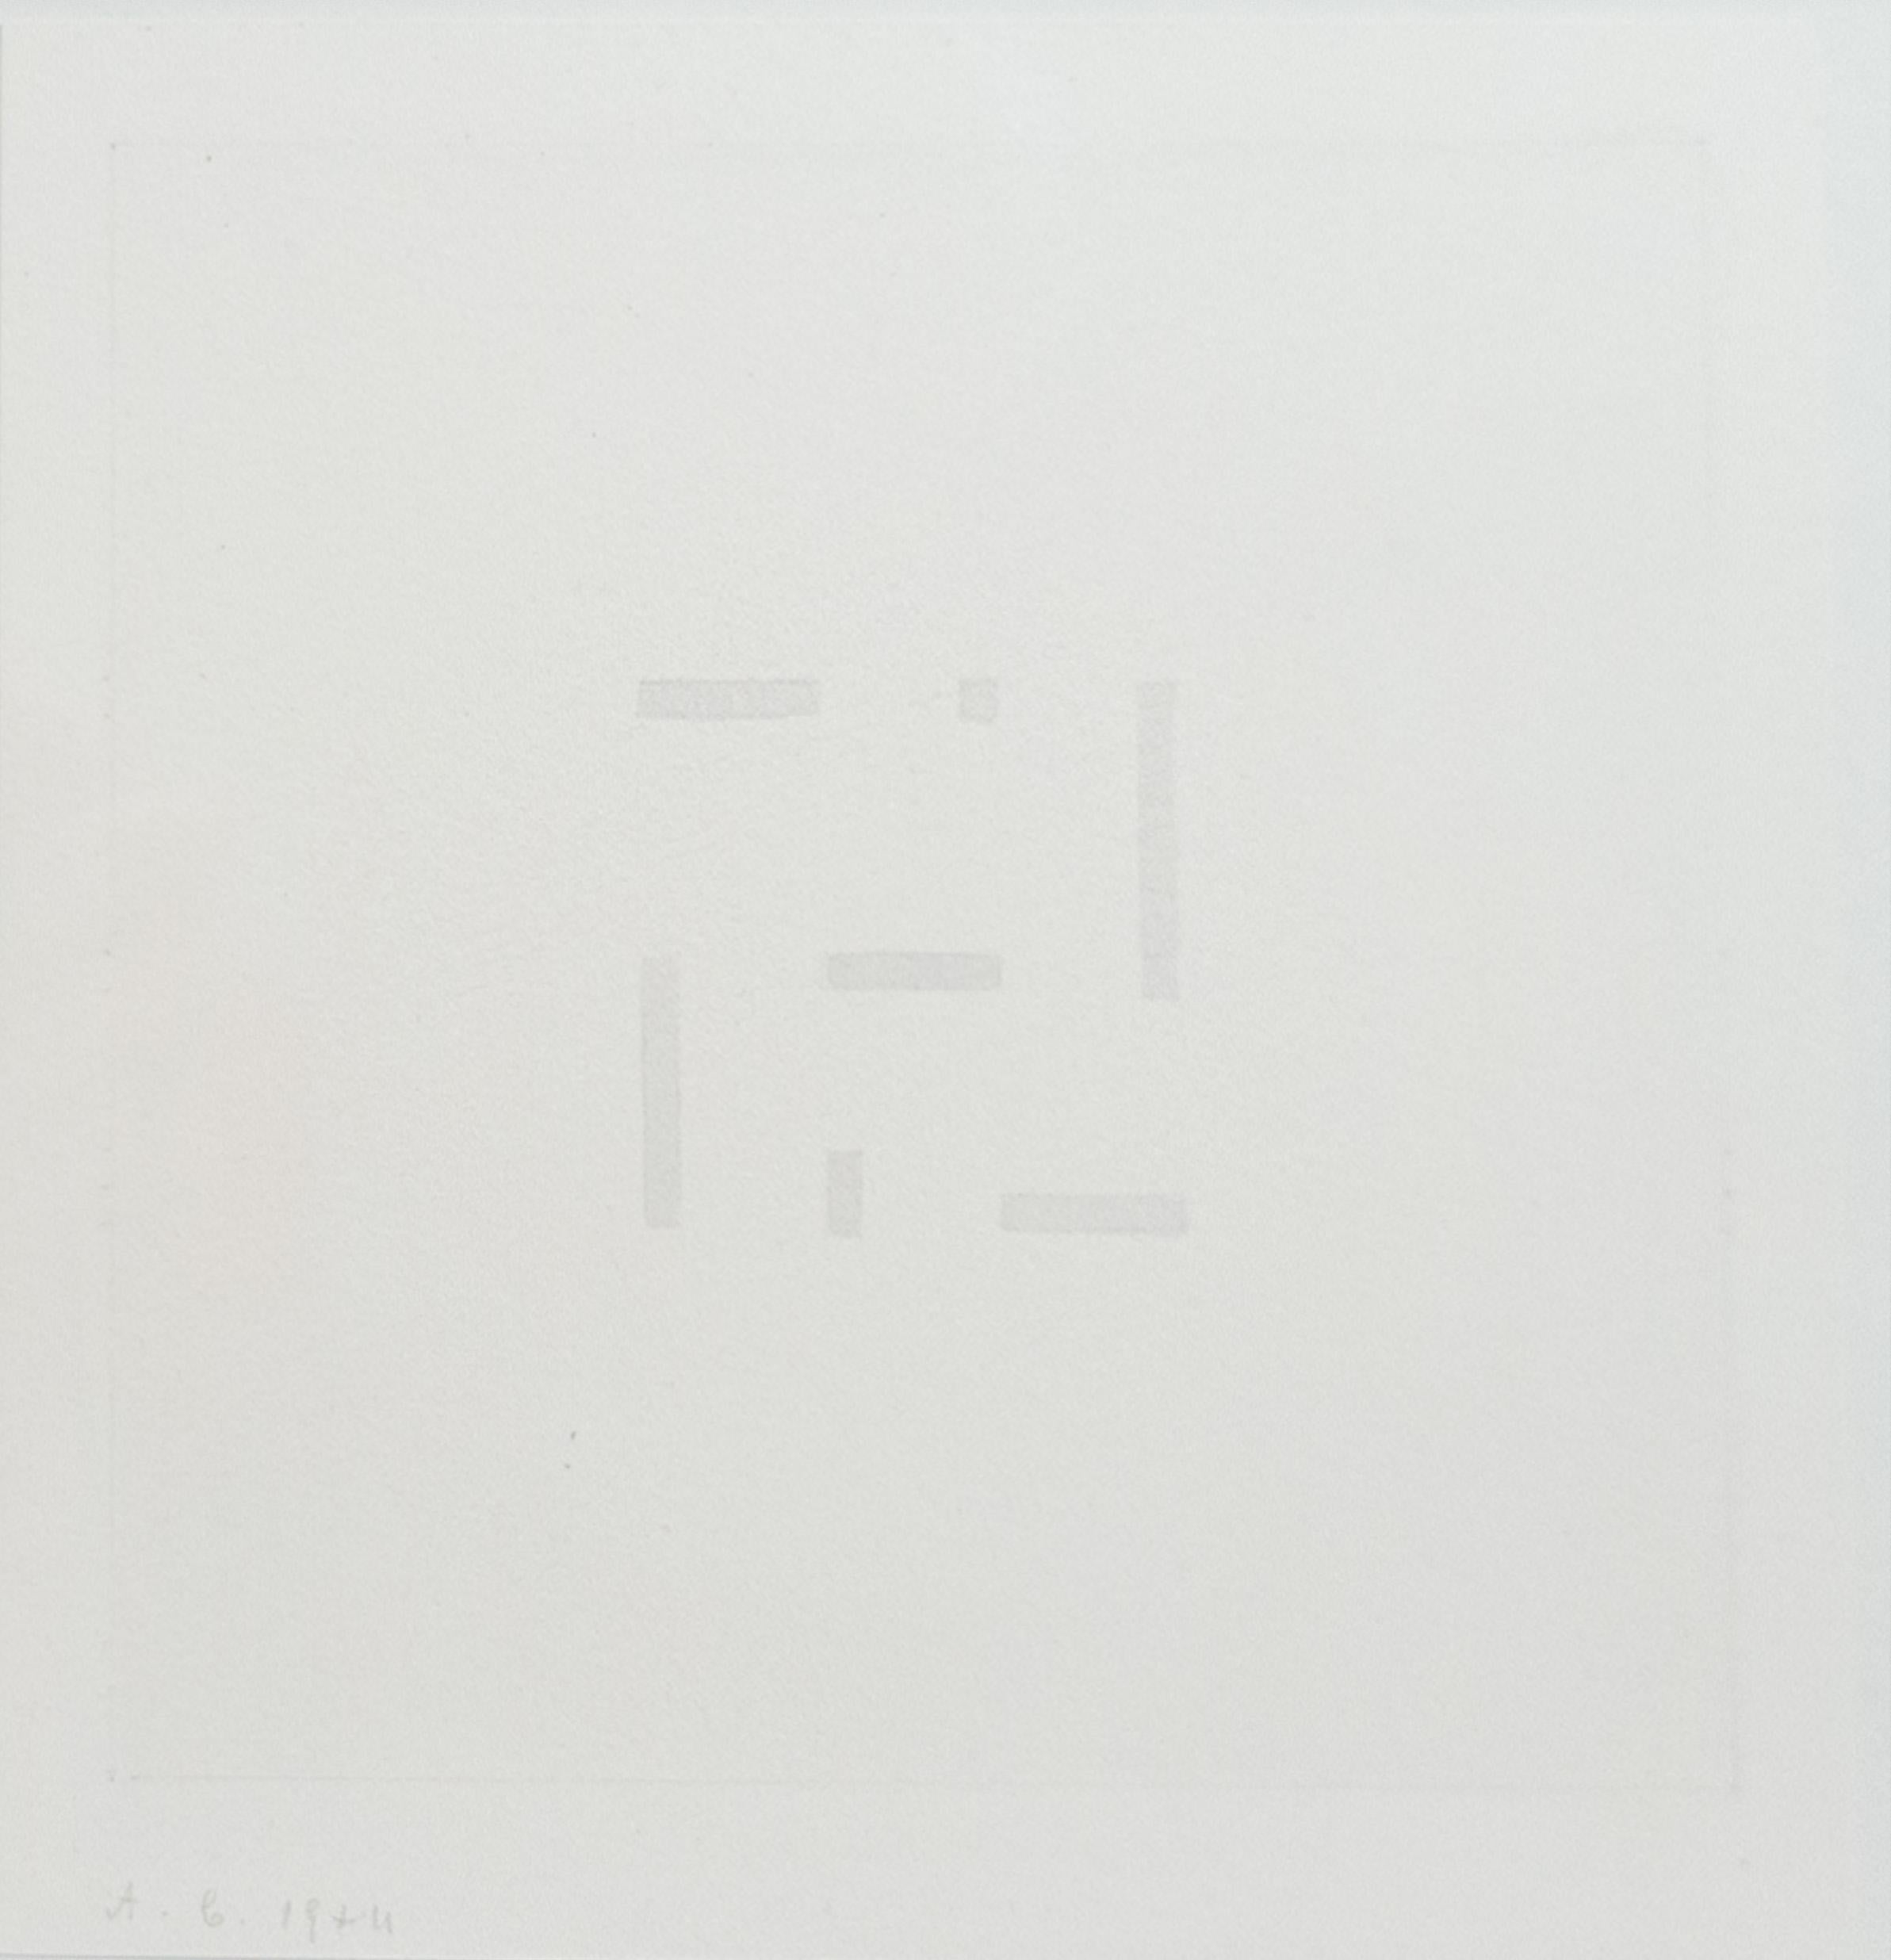 Antonio Calderara Abstract Drawing - Gray constellation B, abstraction, Italian art, minimalism, 1974